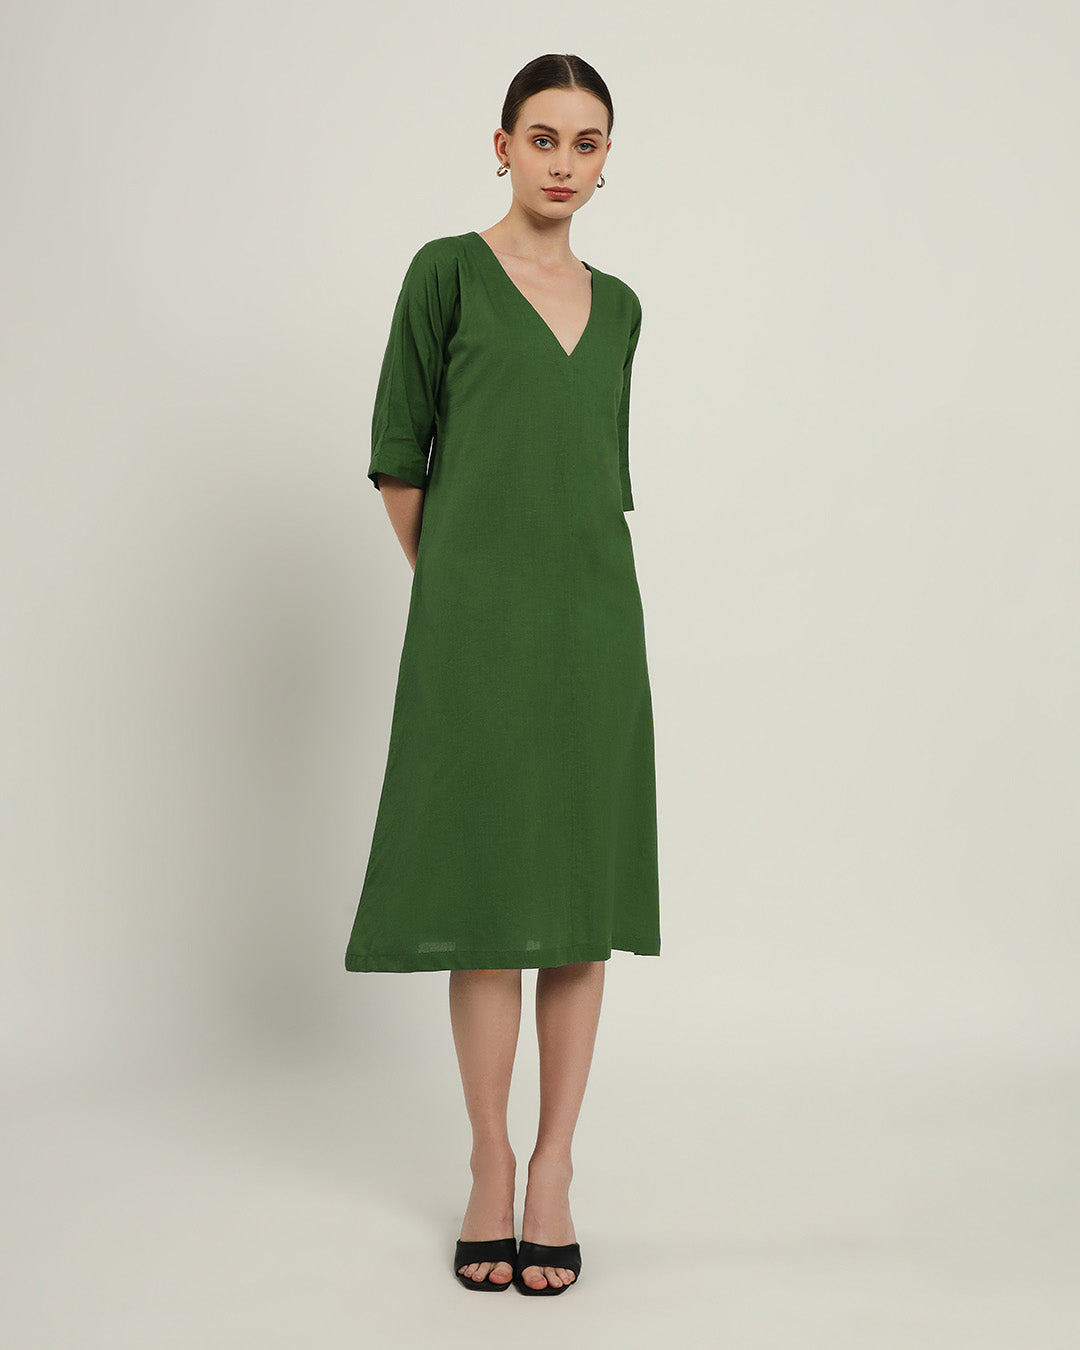 The Mildura Emerald Dress